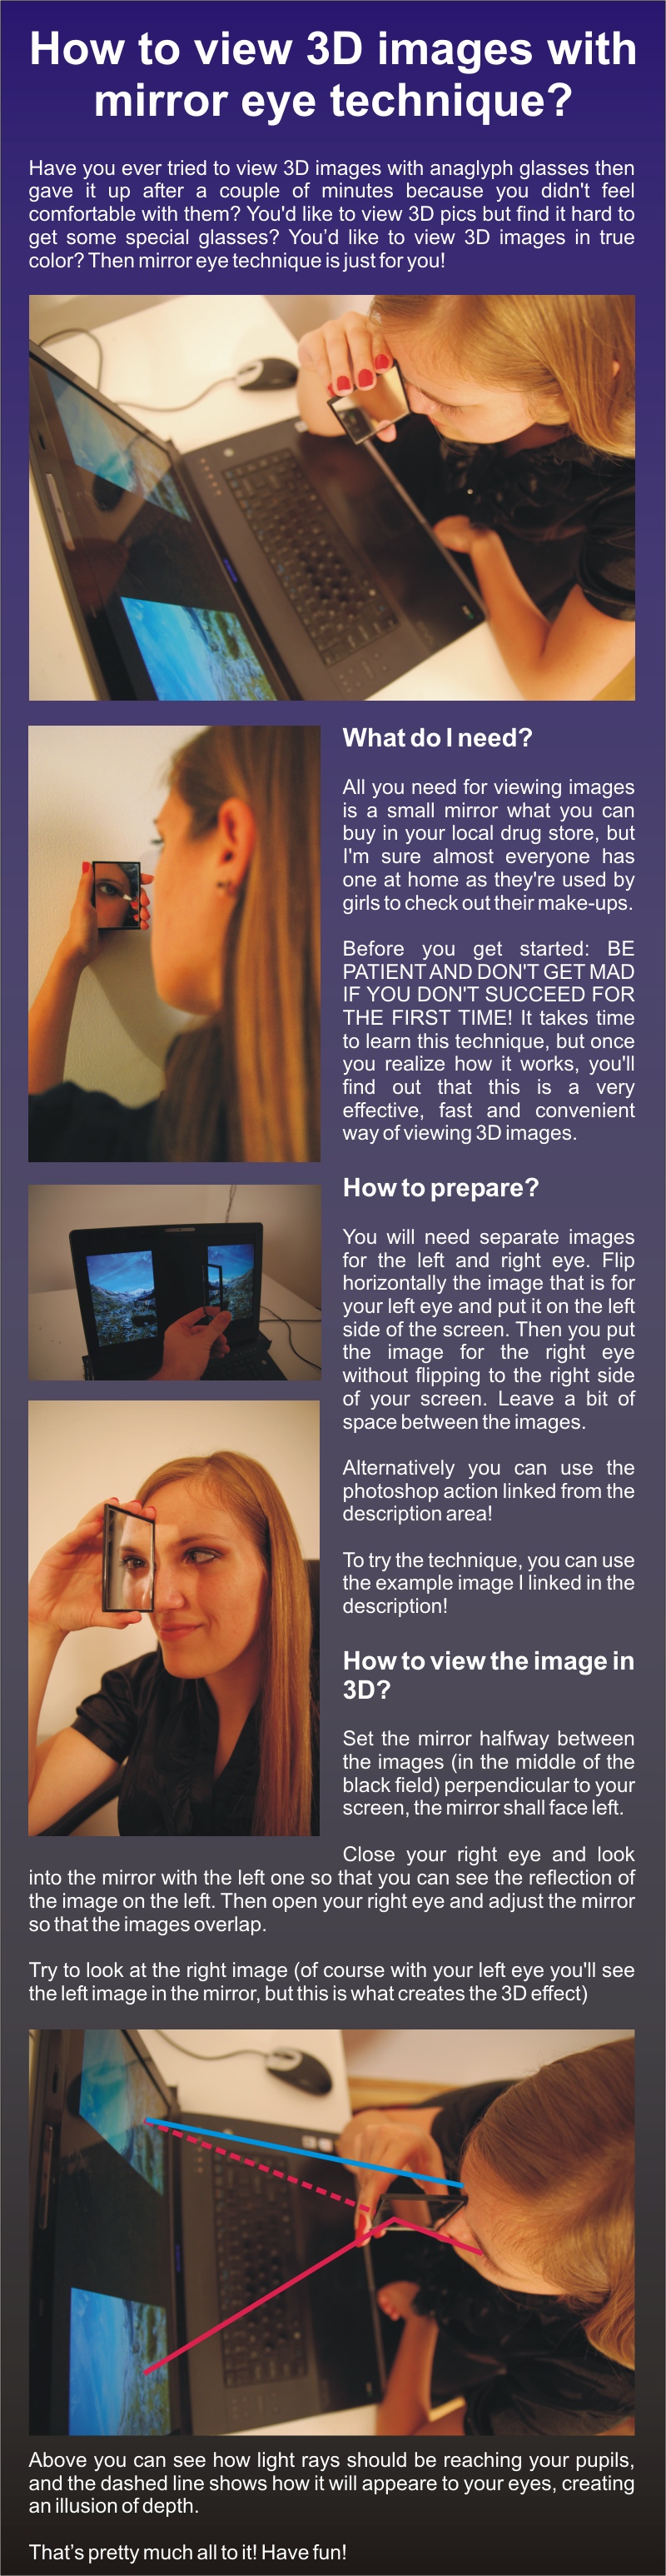 3D mirror eye view tutorial